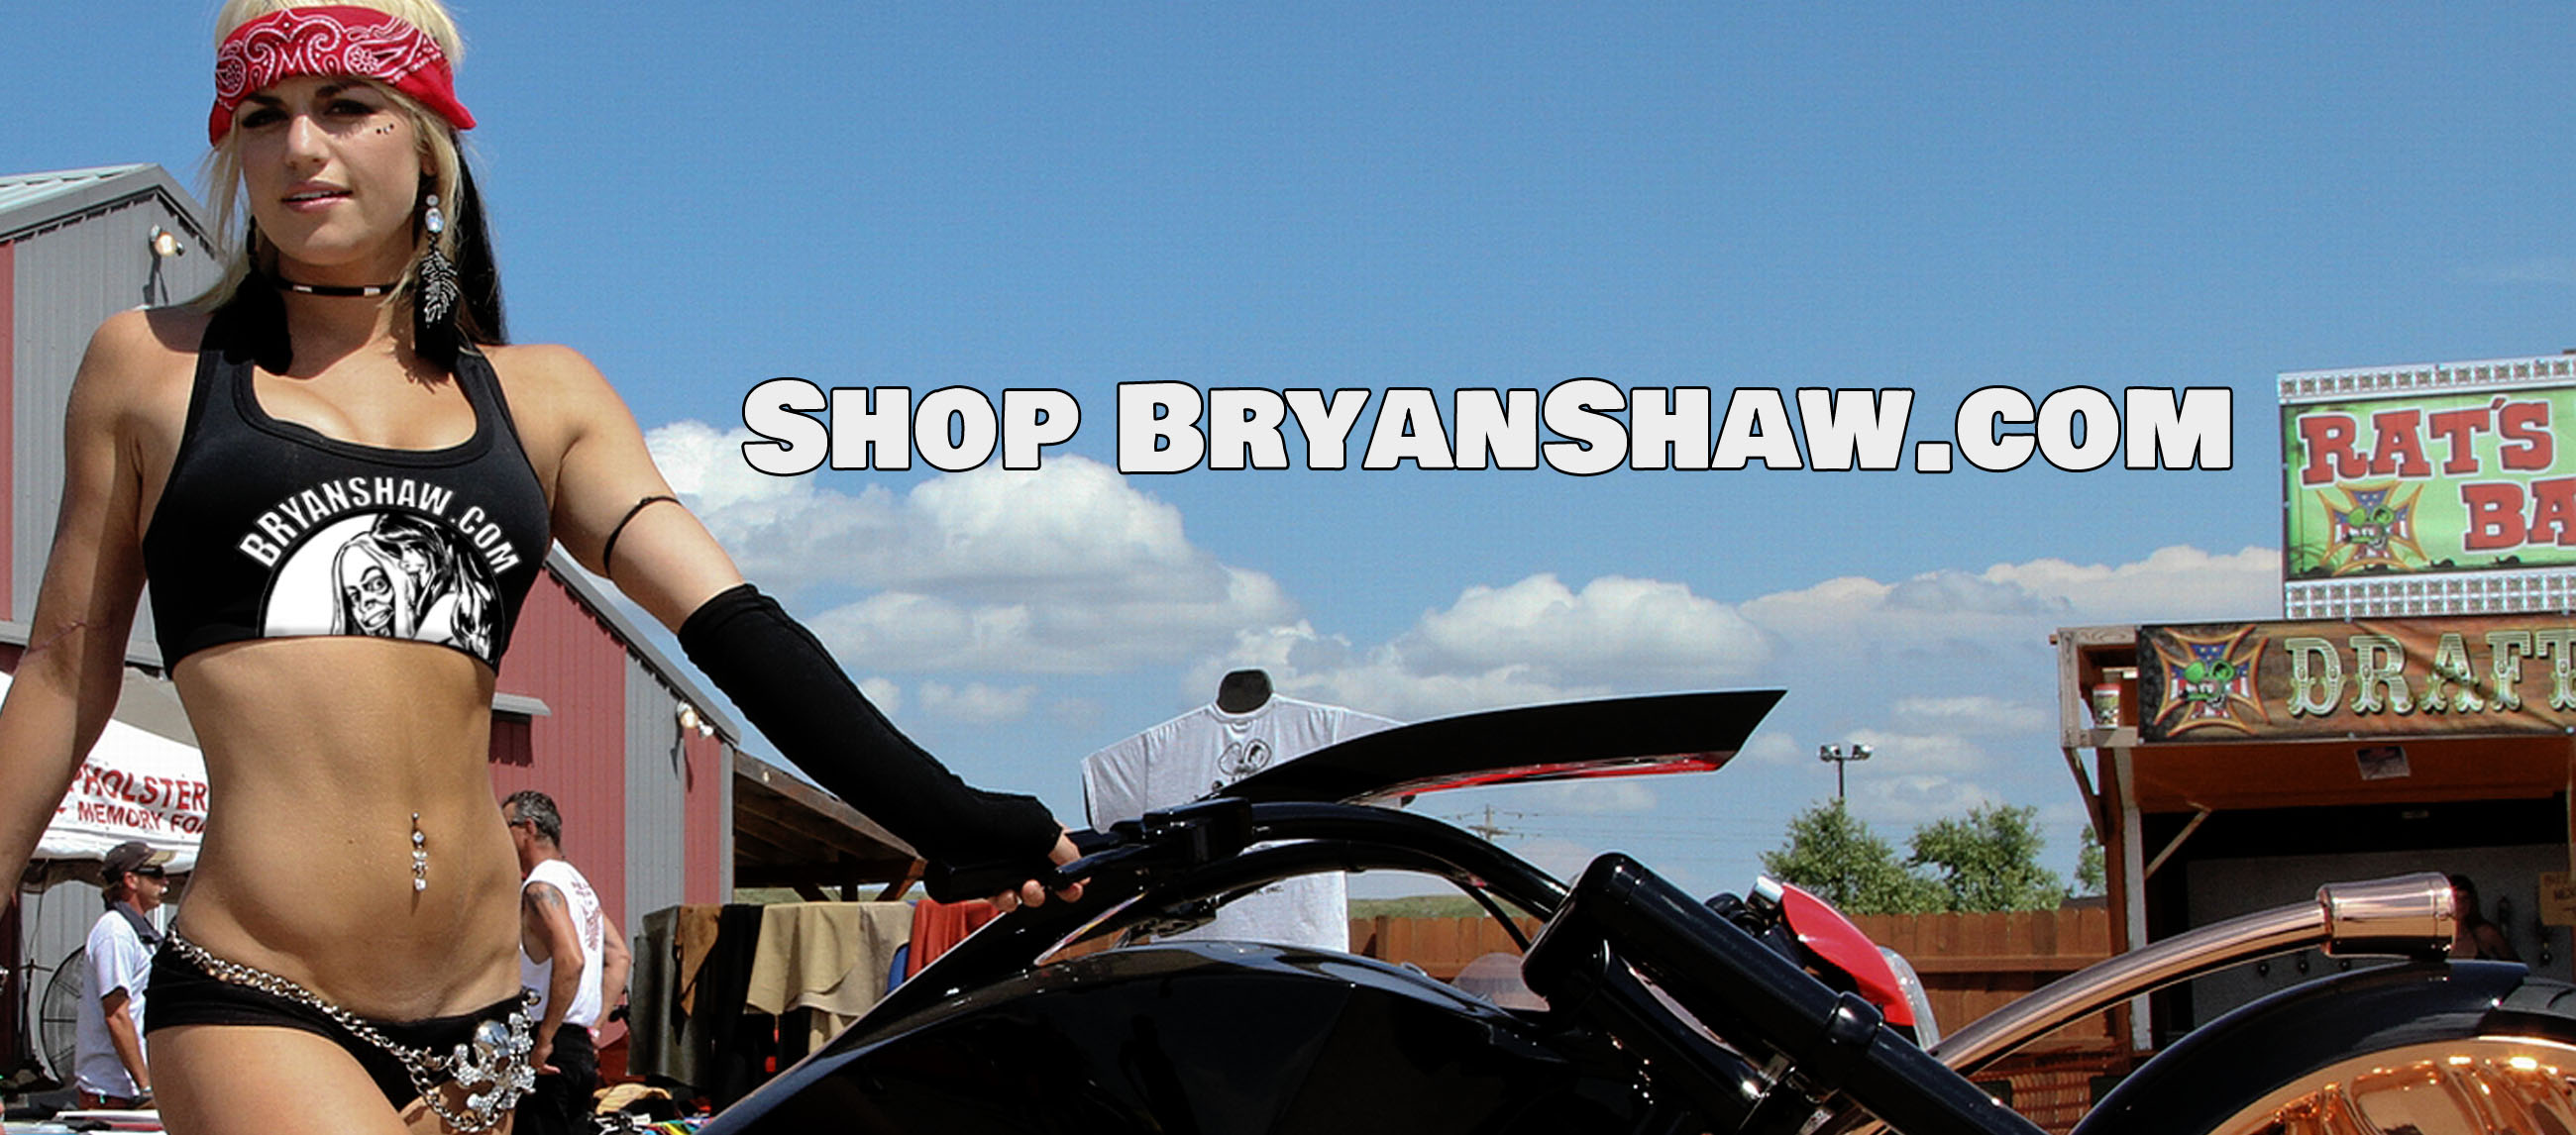 bryan shaw store